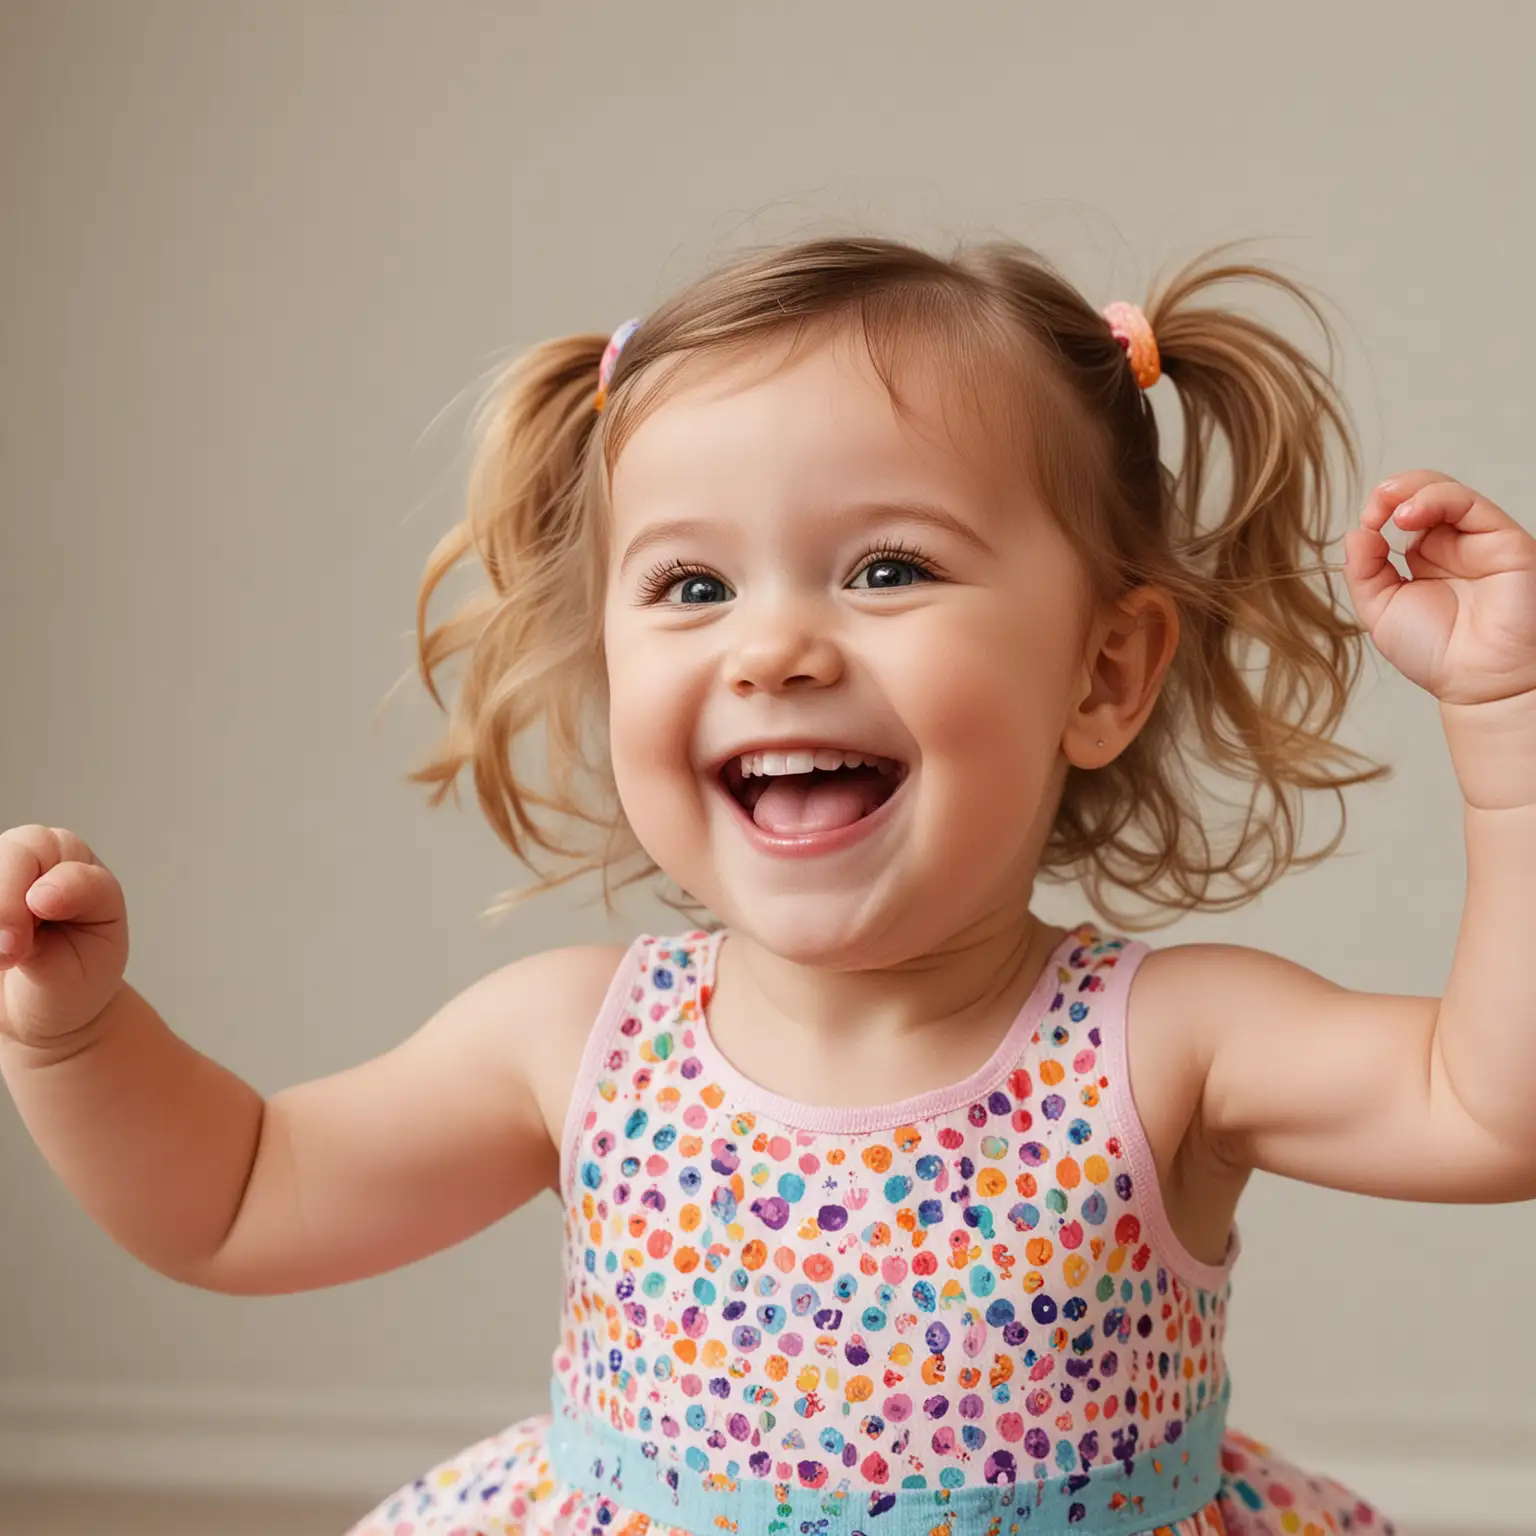 Smiling Toddler Dancing in Bright Colors Joyful 2YearOld Enjoying Whimsical Fun